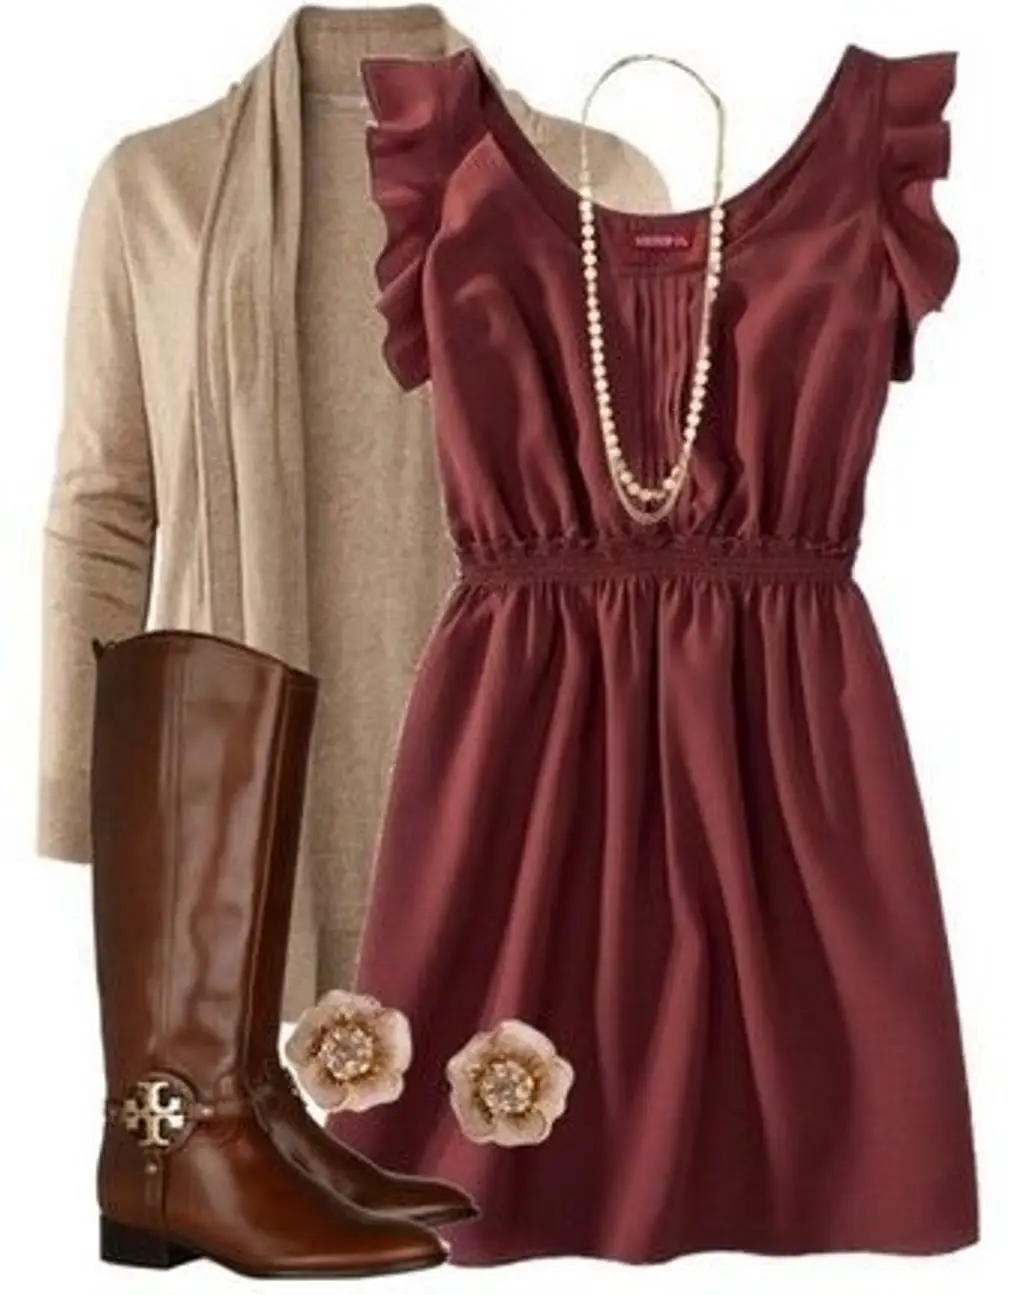 clothing,day dress,dress,sleeve,maroon,